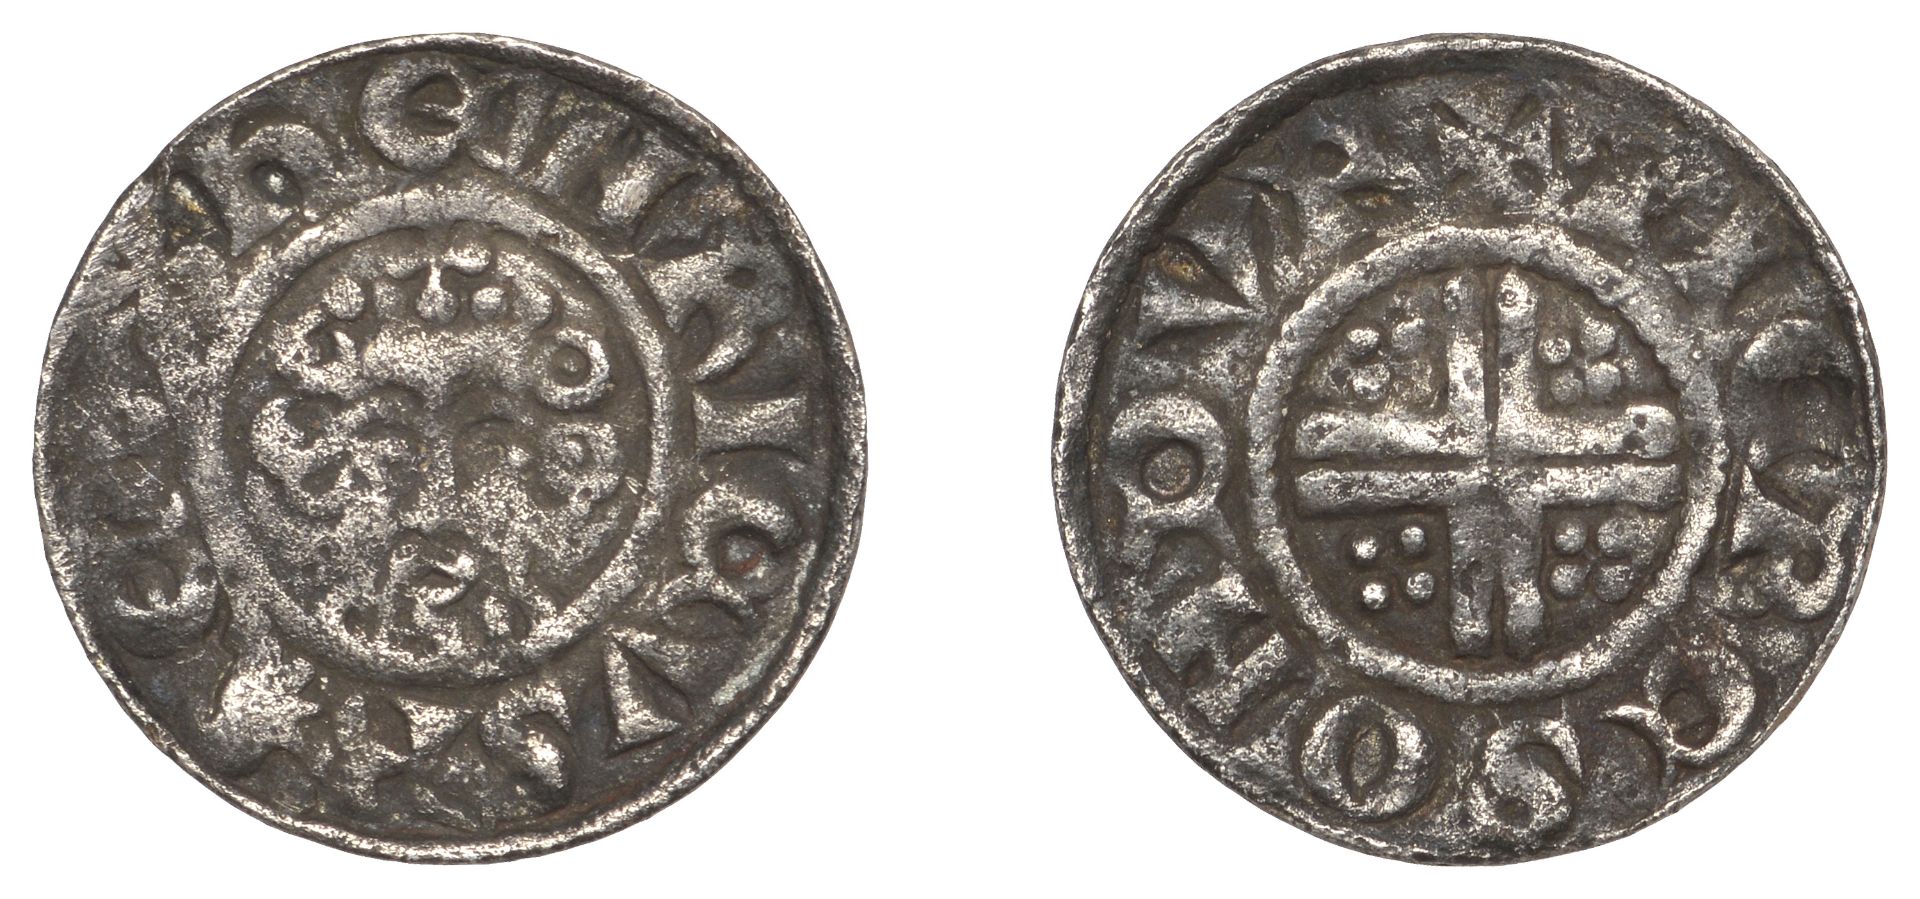 Henry III (1216-1272), Penny, class VIIa1, Durham, Pieres, pieres on dvr, 1.34g/2g (BNJ 2018...